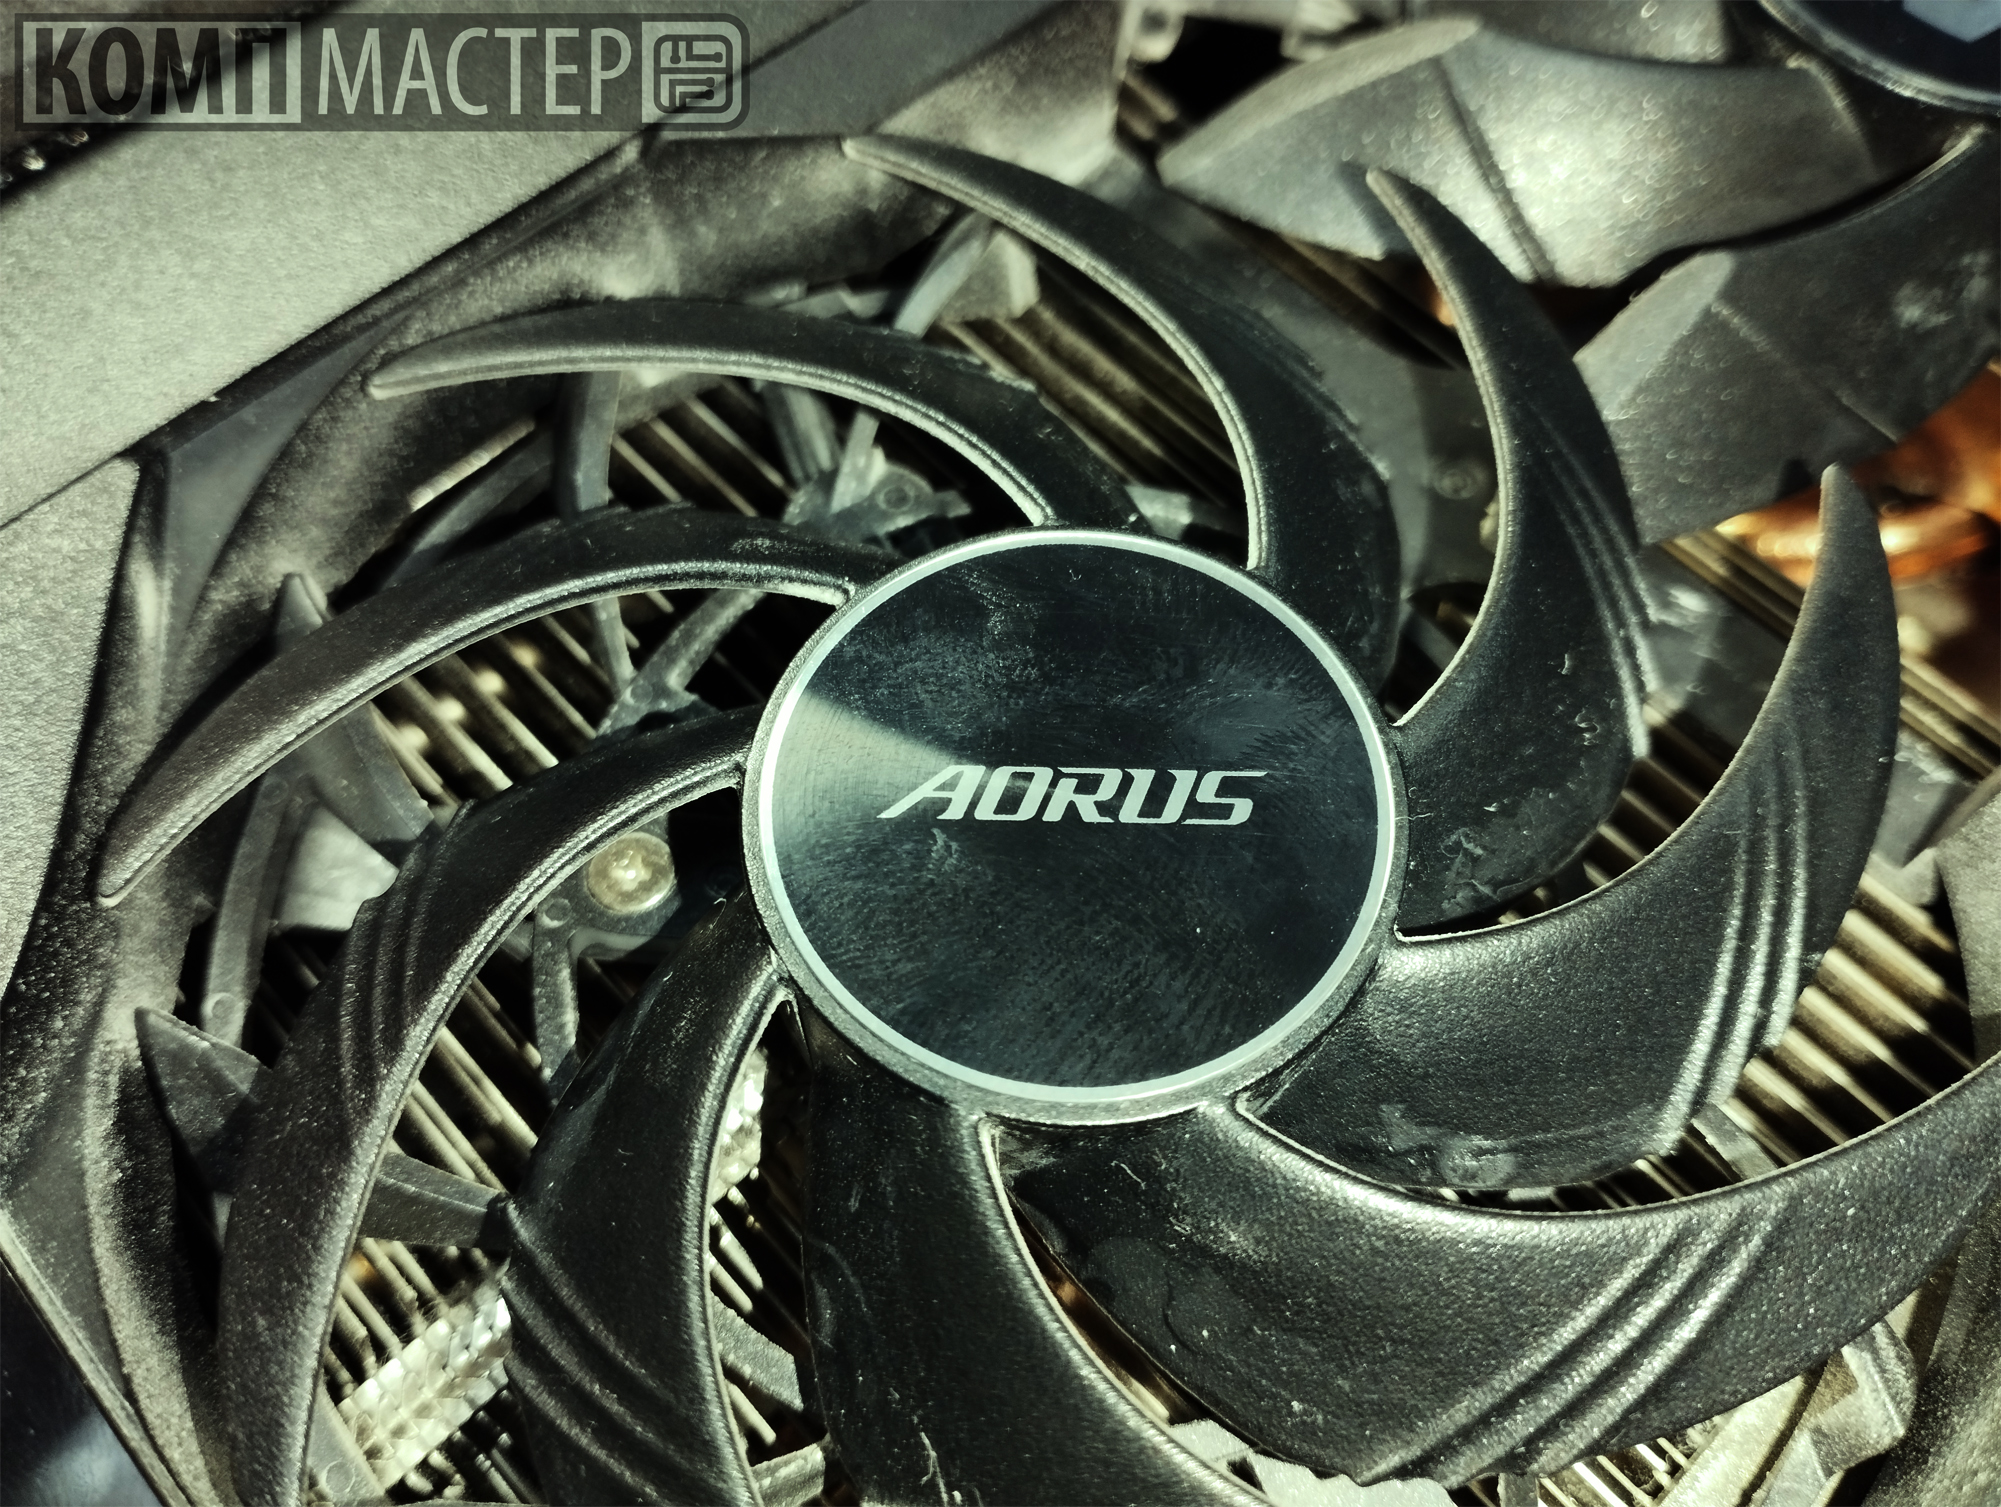 Профилактика и мелкий ремонт AORUS RTX3090 24GB